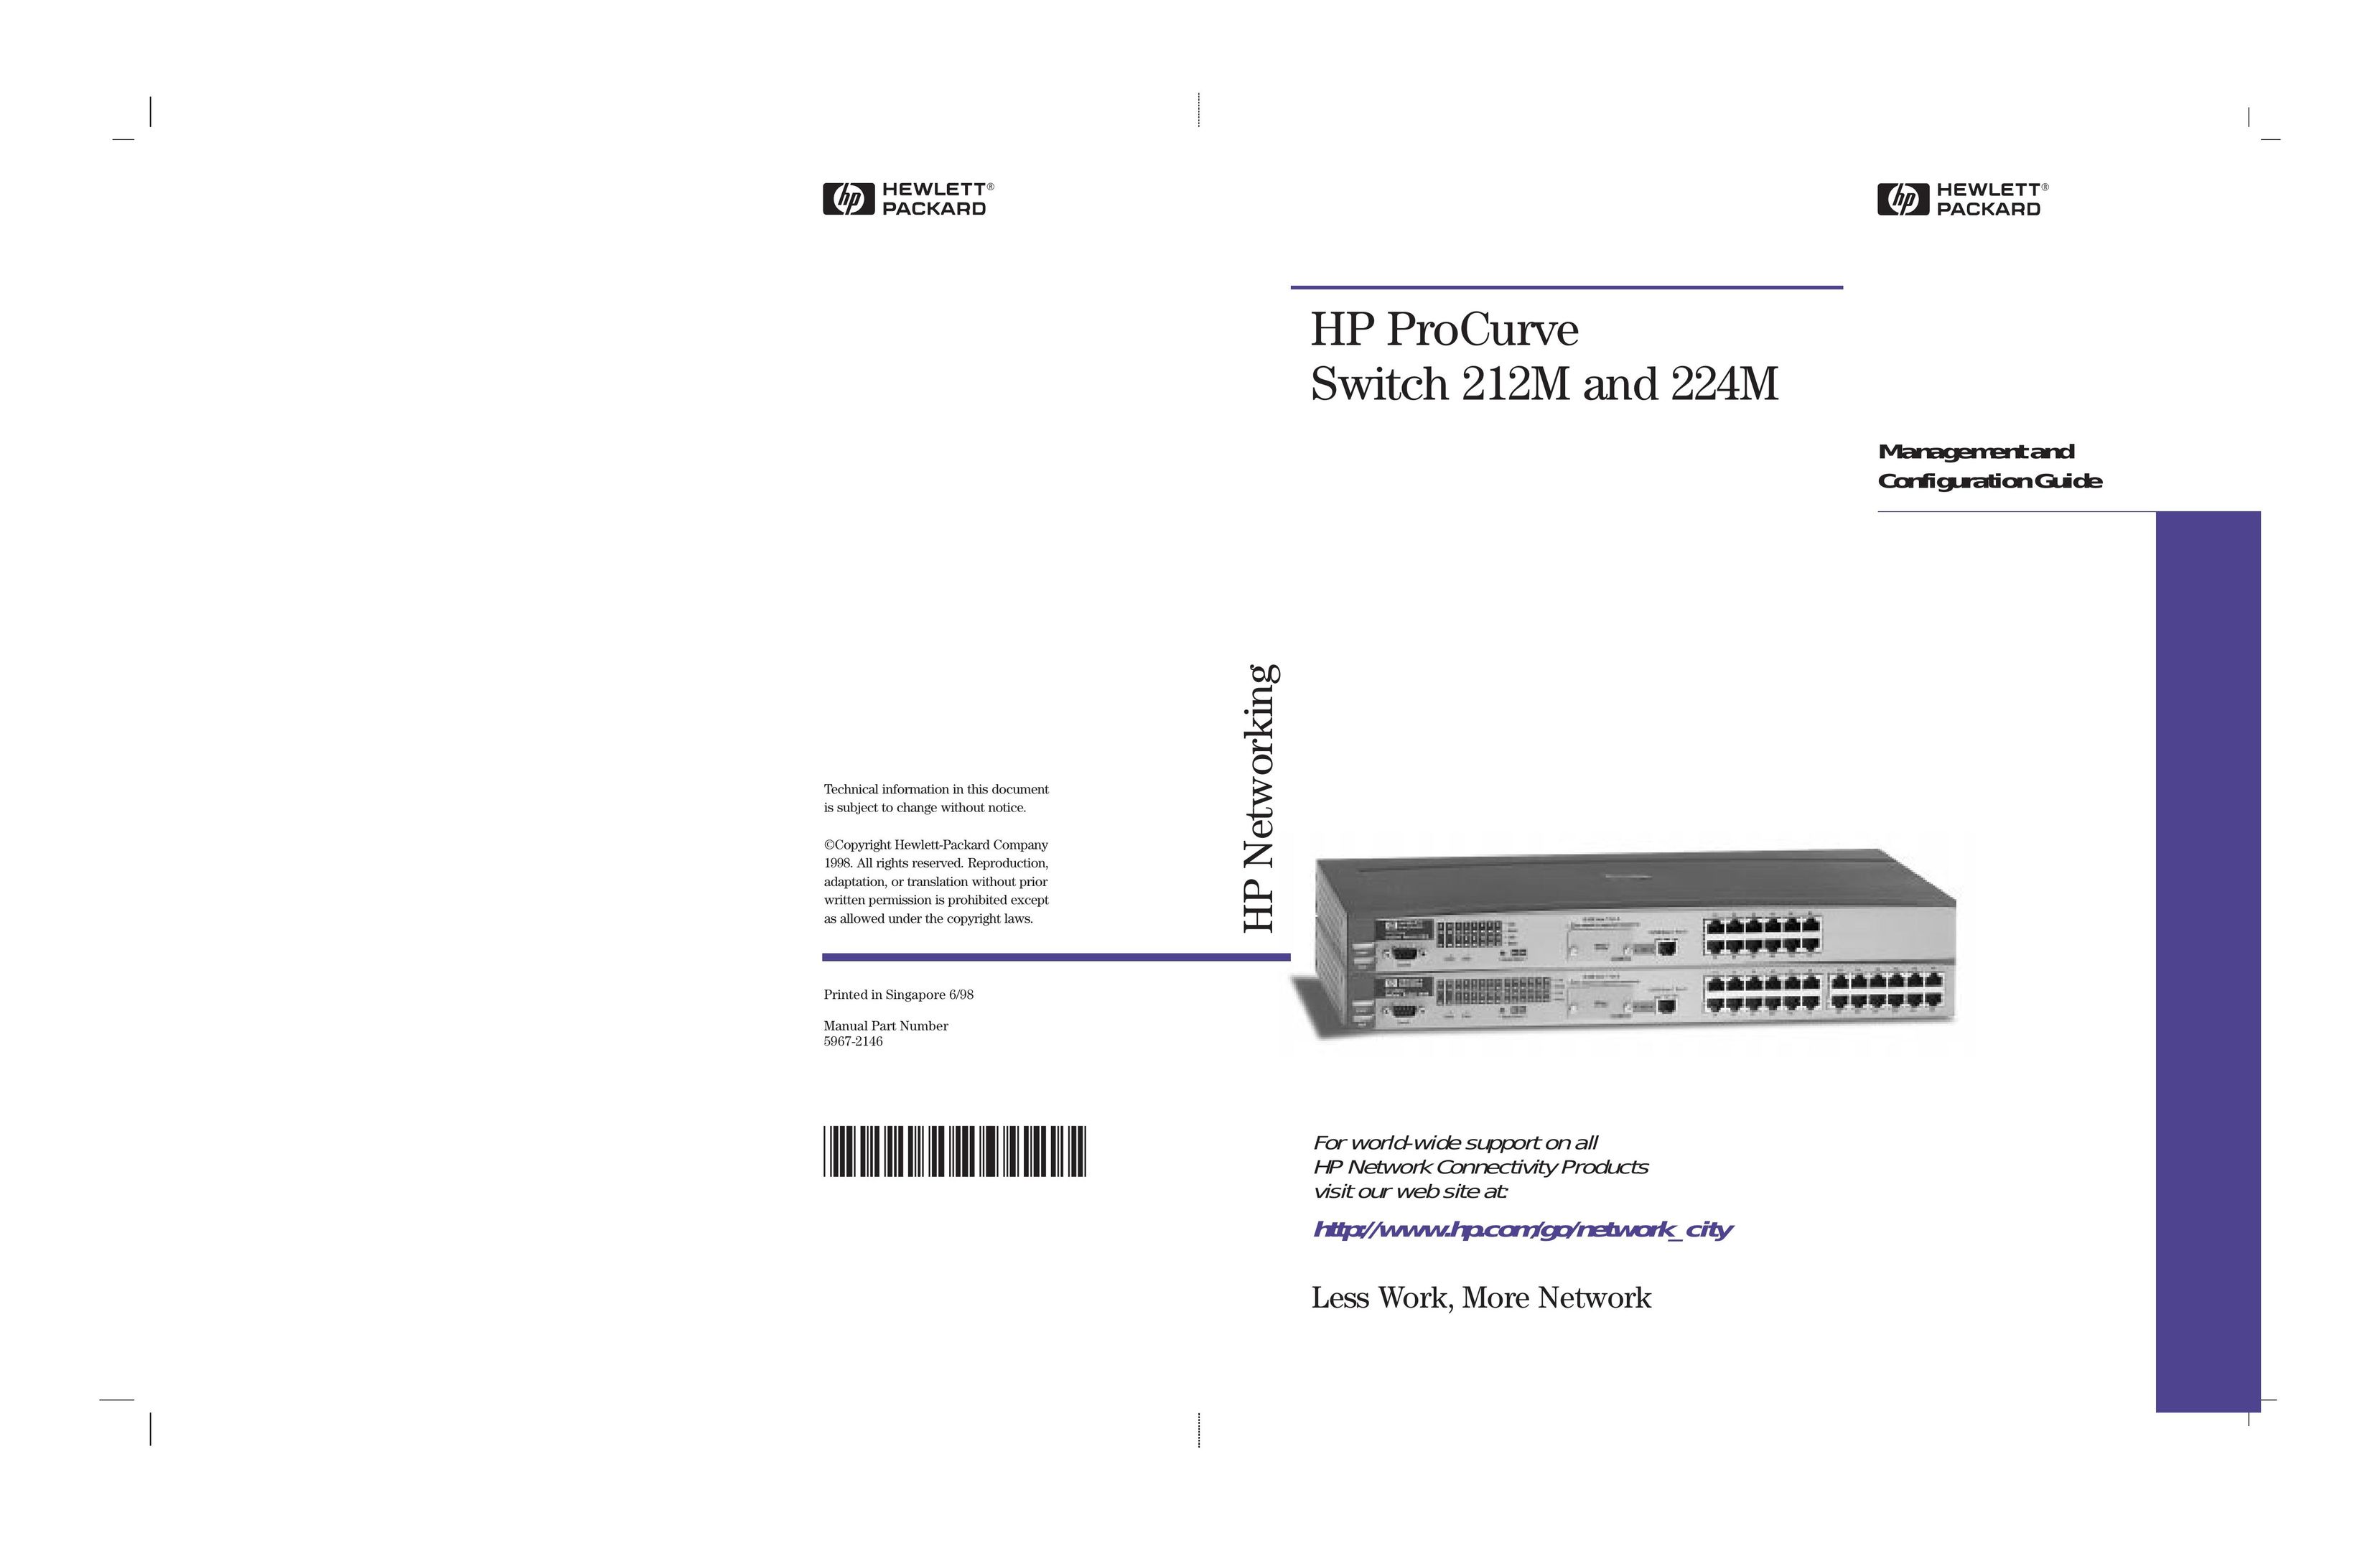 HP (Hewlett-Packard) 224M Switch User Manual